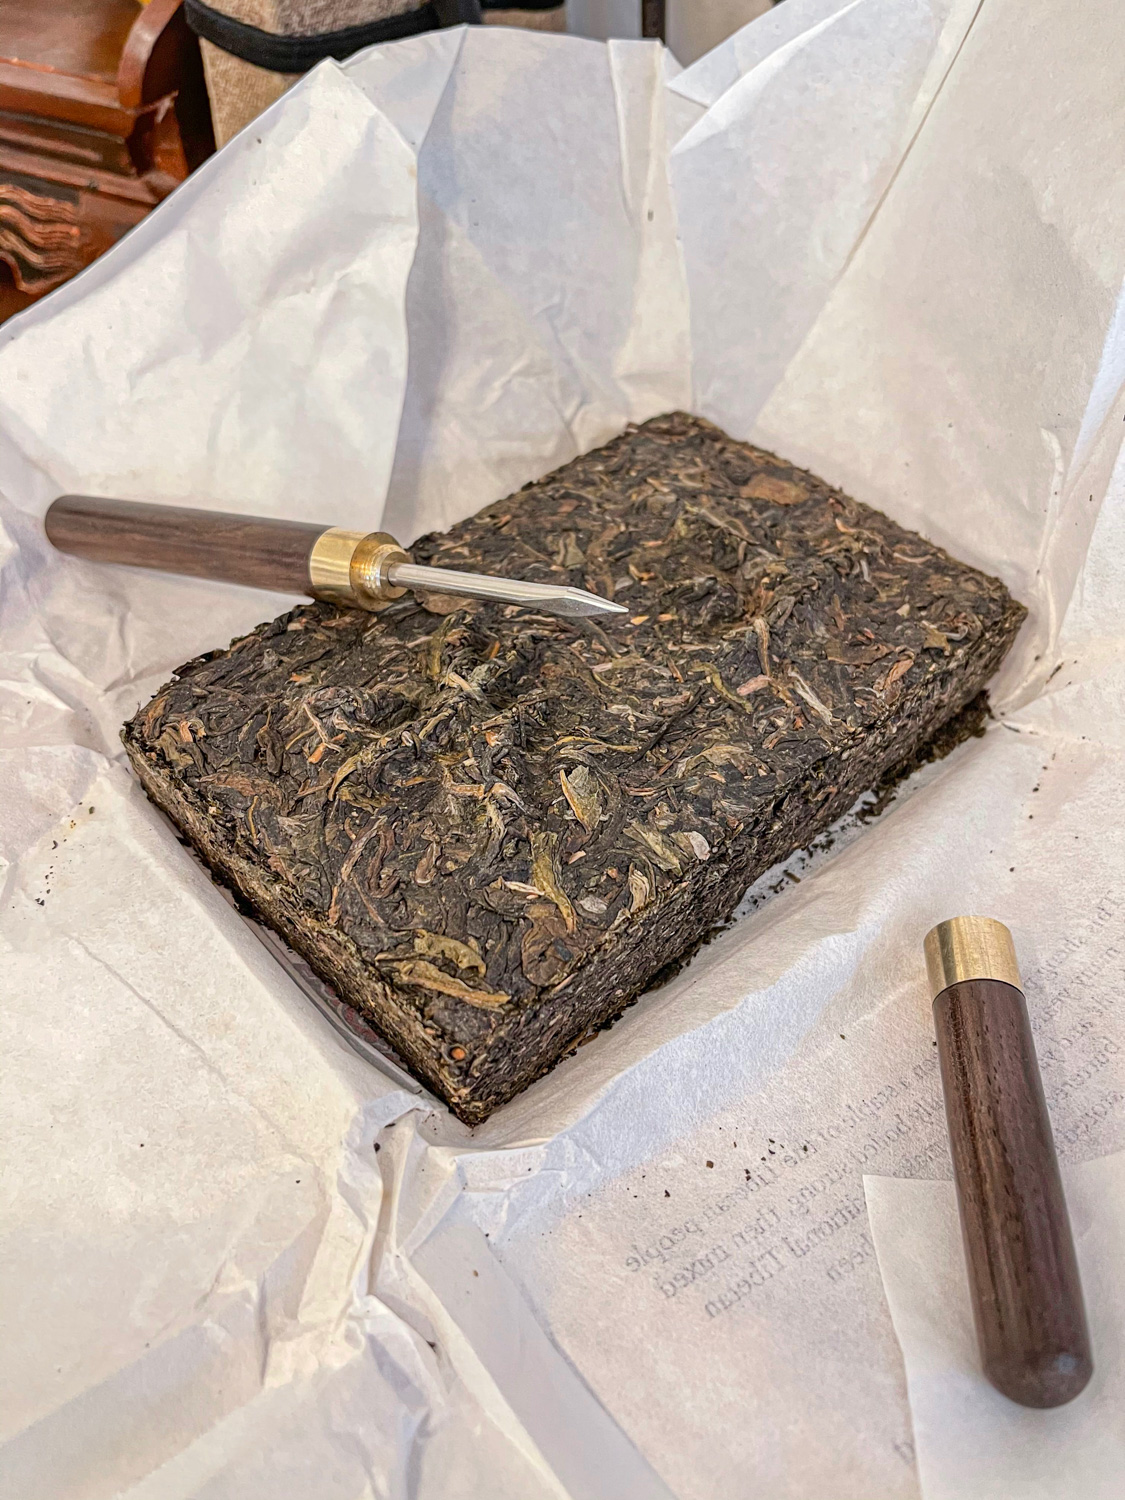 Tibetan Yak Butter Tea – 2013 Xiaguan Holy Flame Raw Puerh